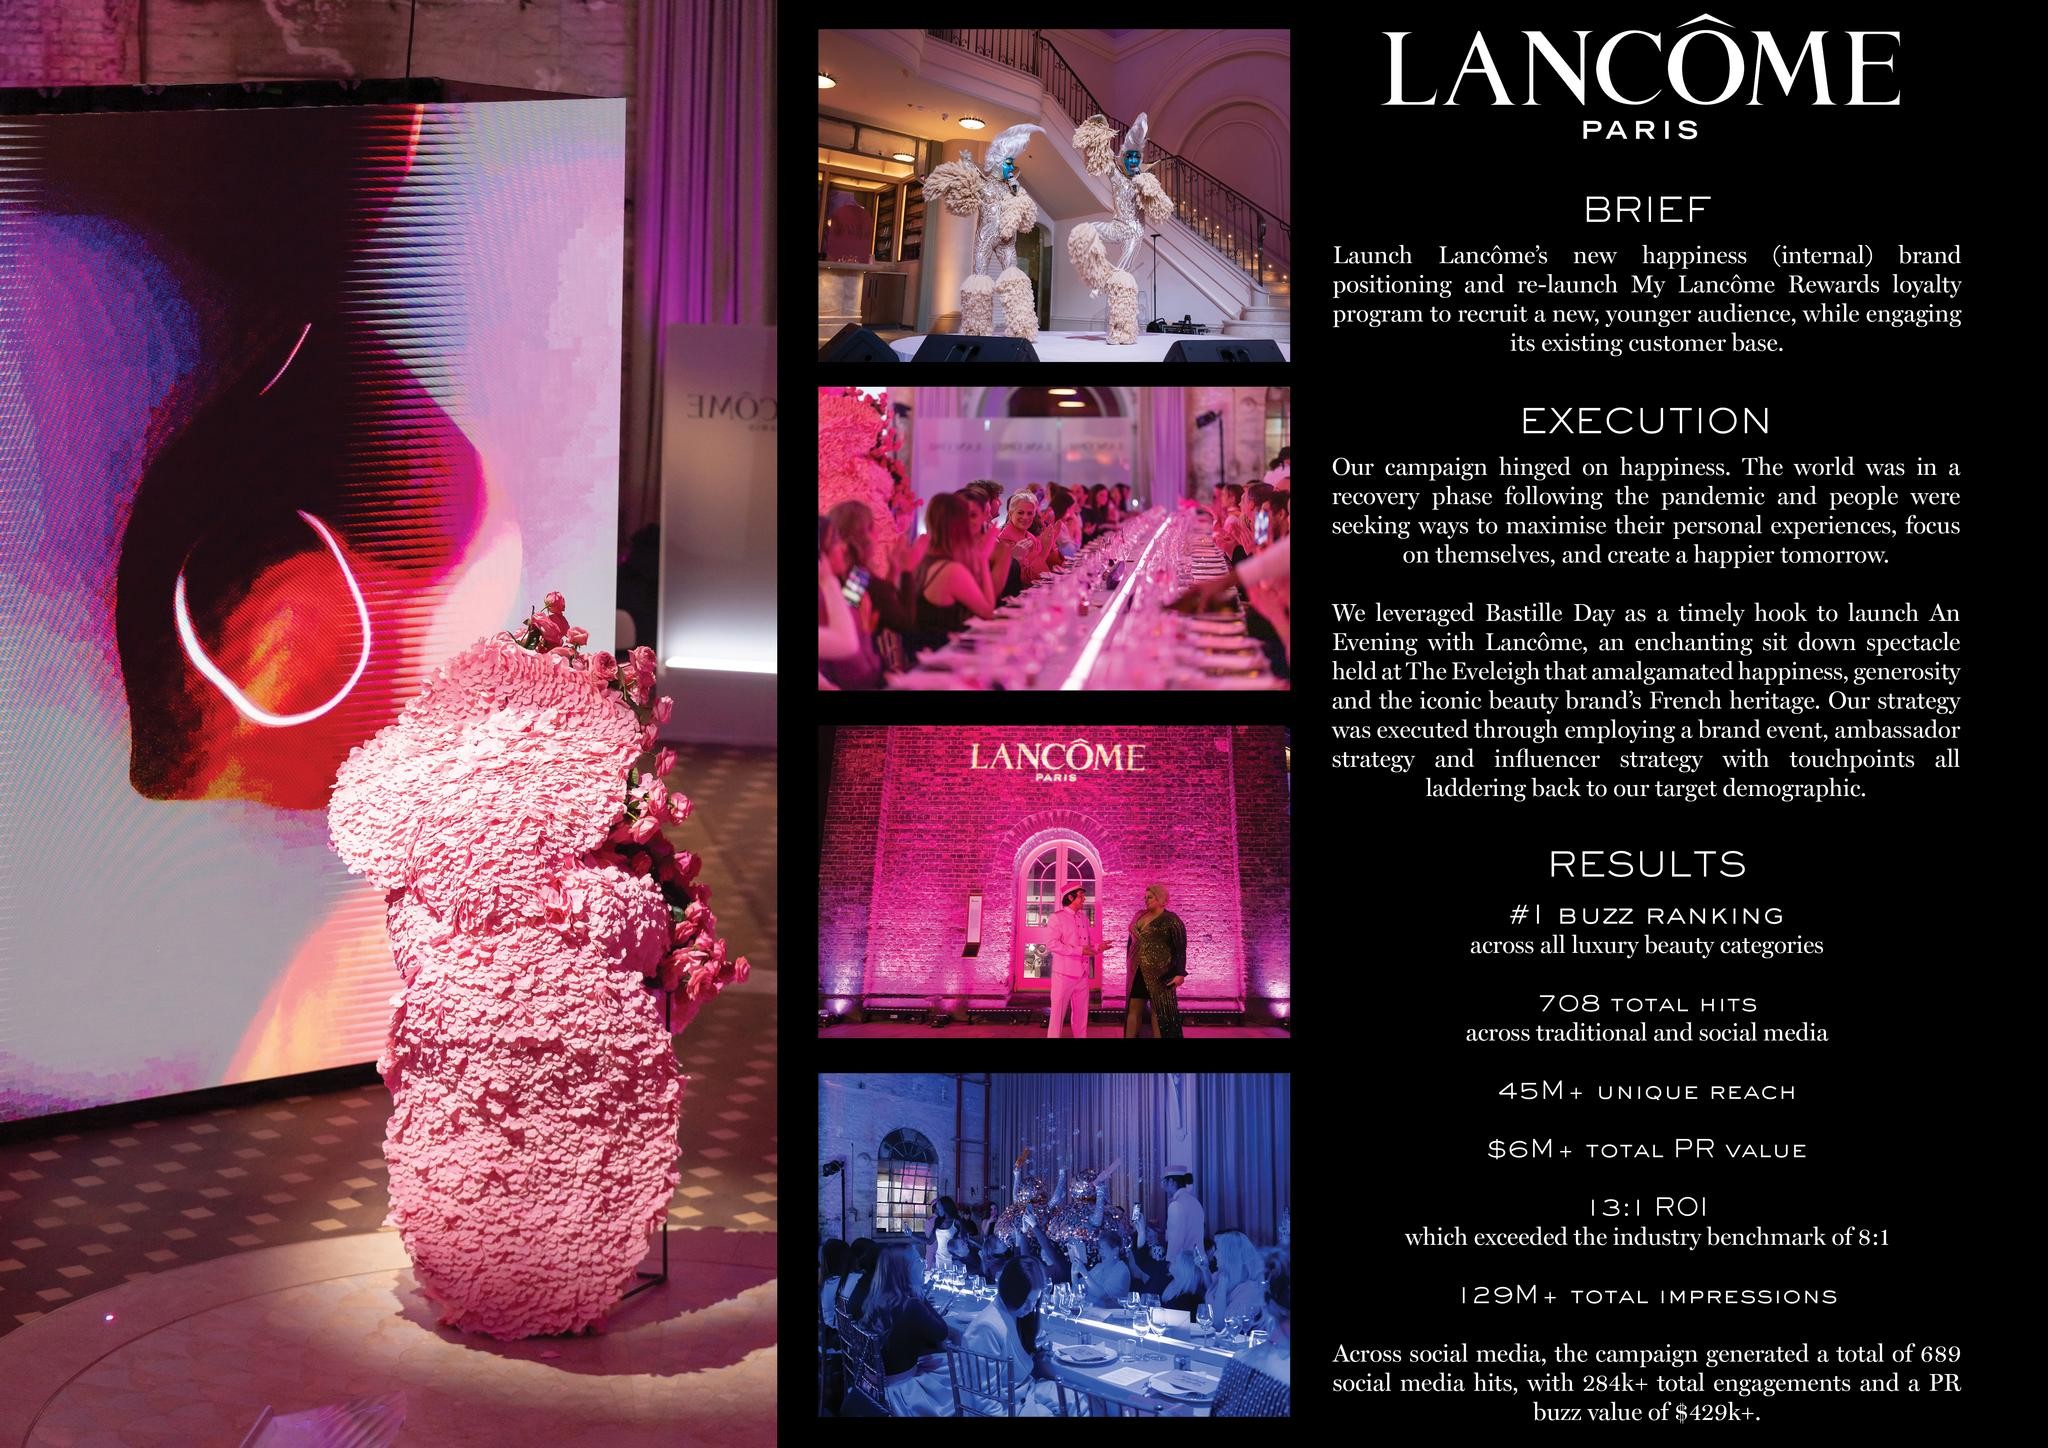 An Evening With Lancôme